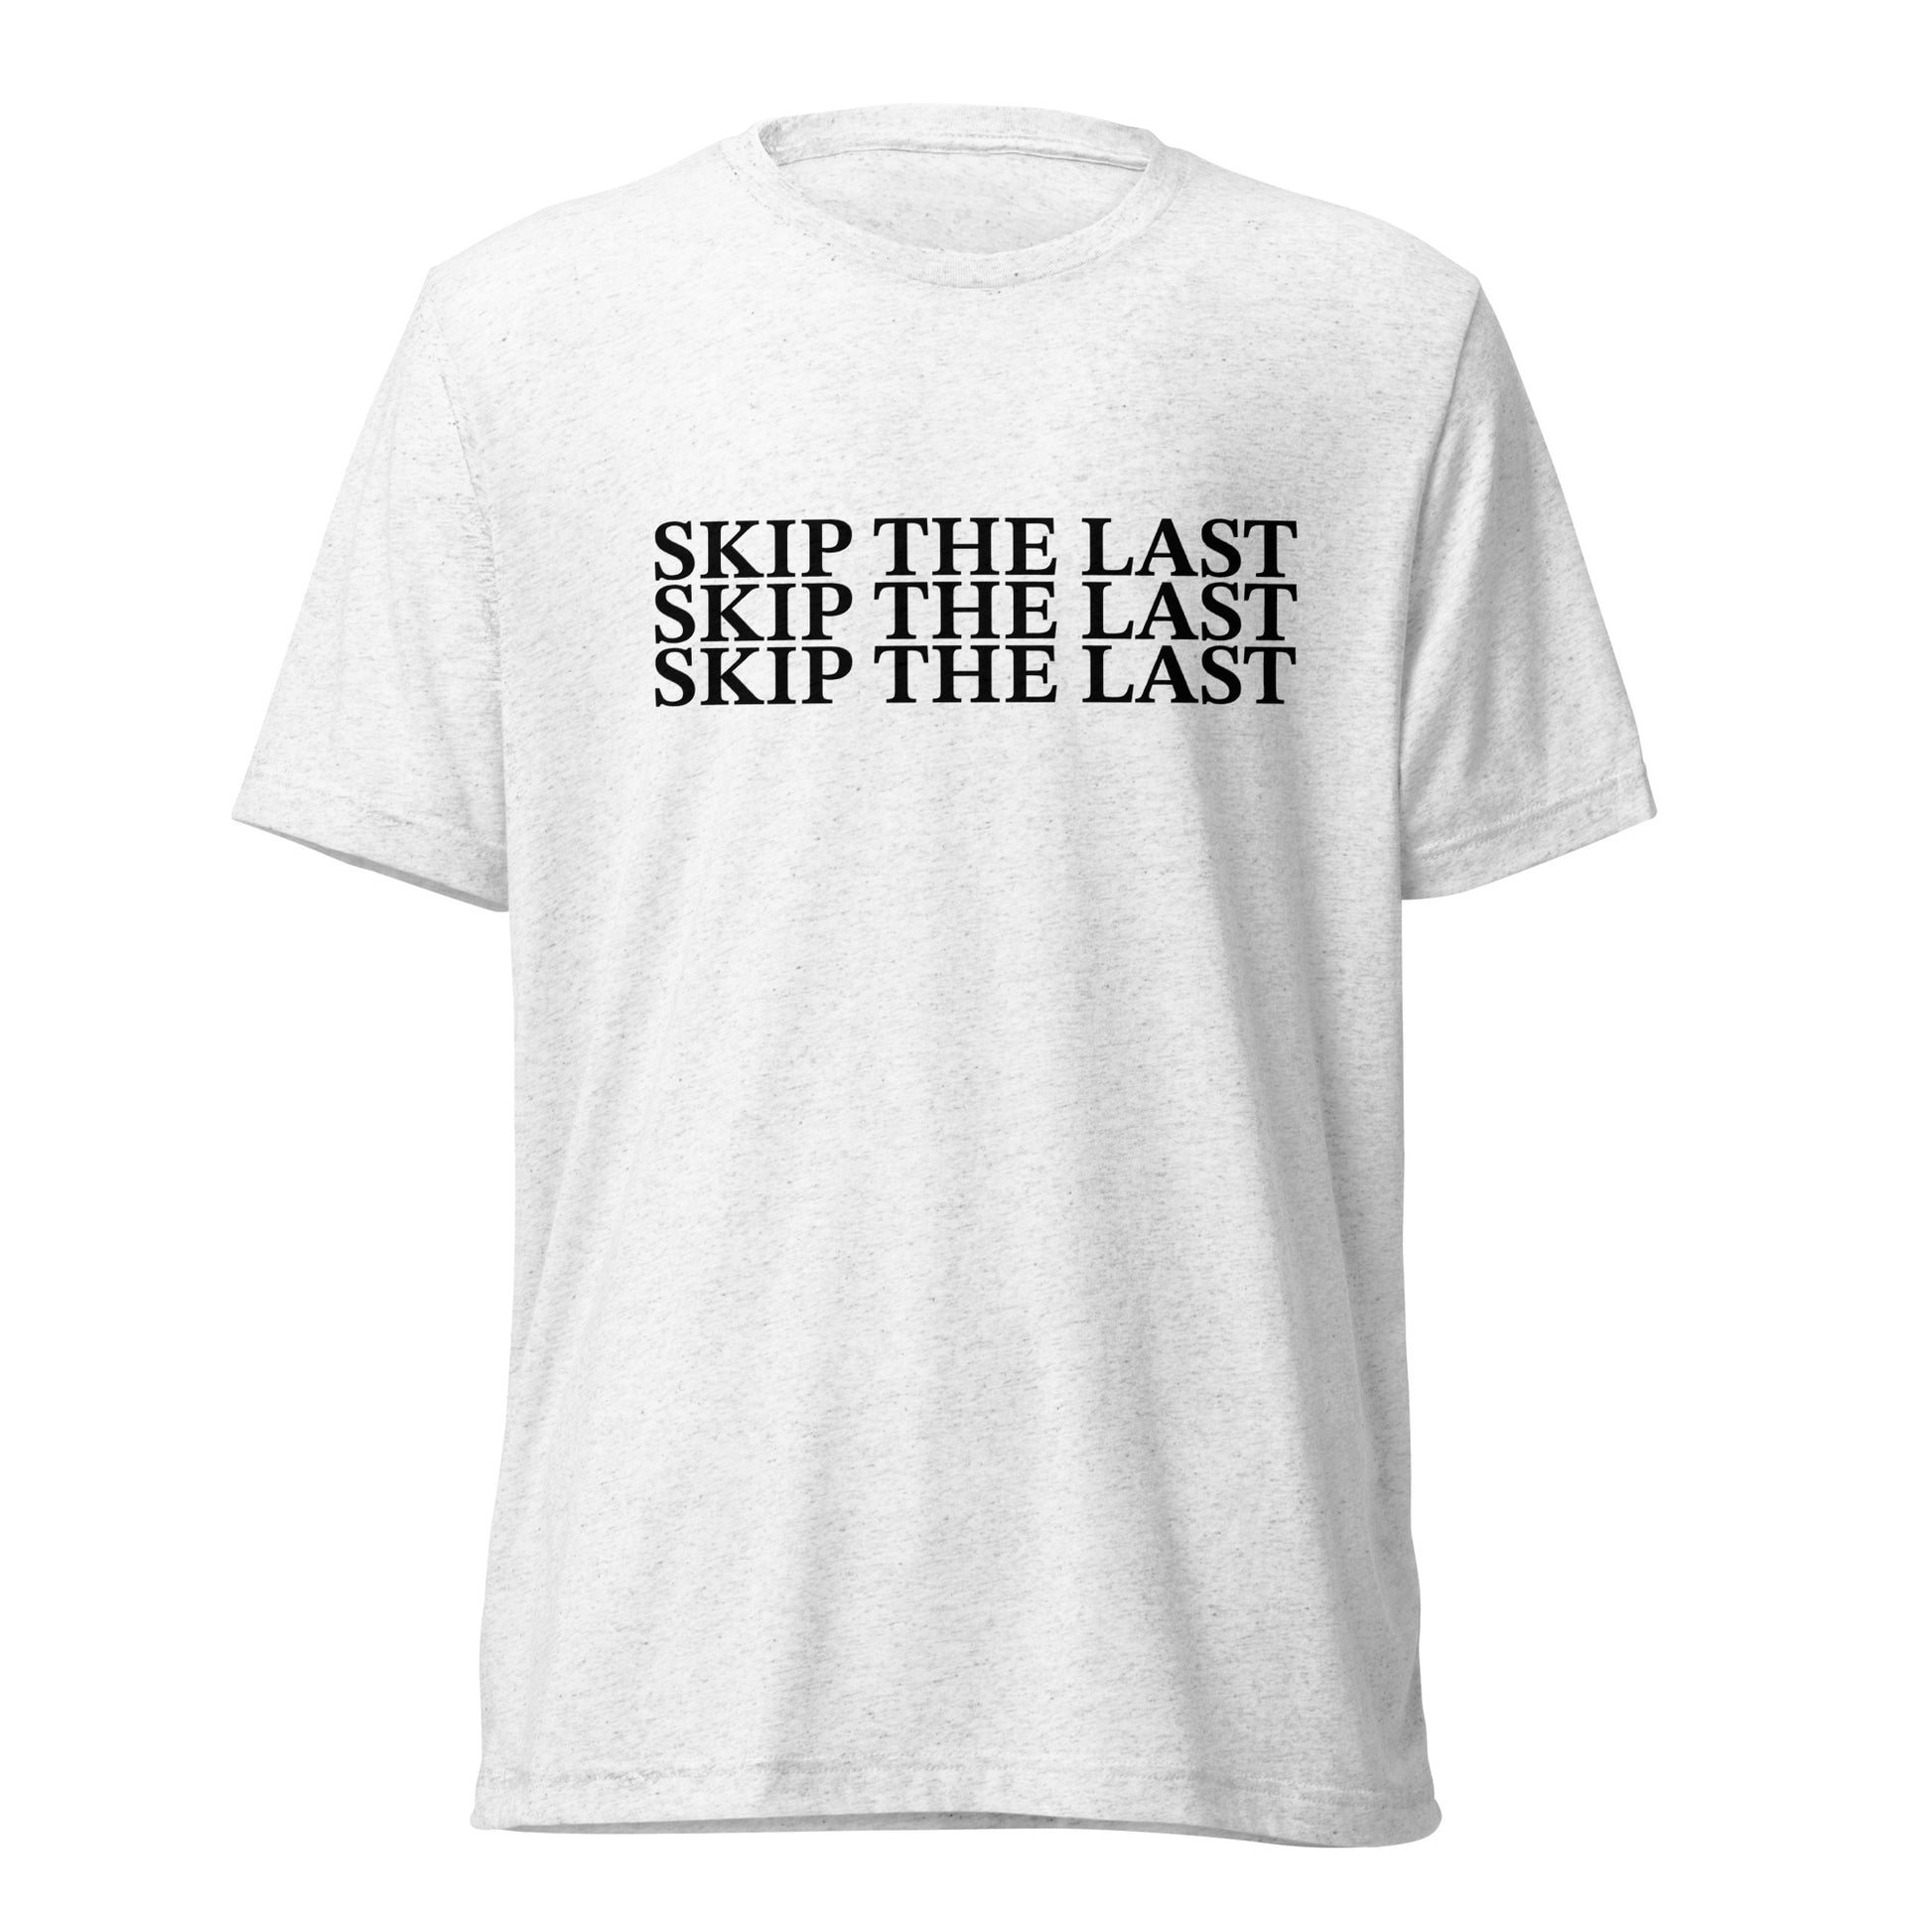 Two More Skip The Last "Skip the Last x3" white unisex tri-blend t-shirt. Front view